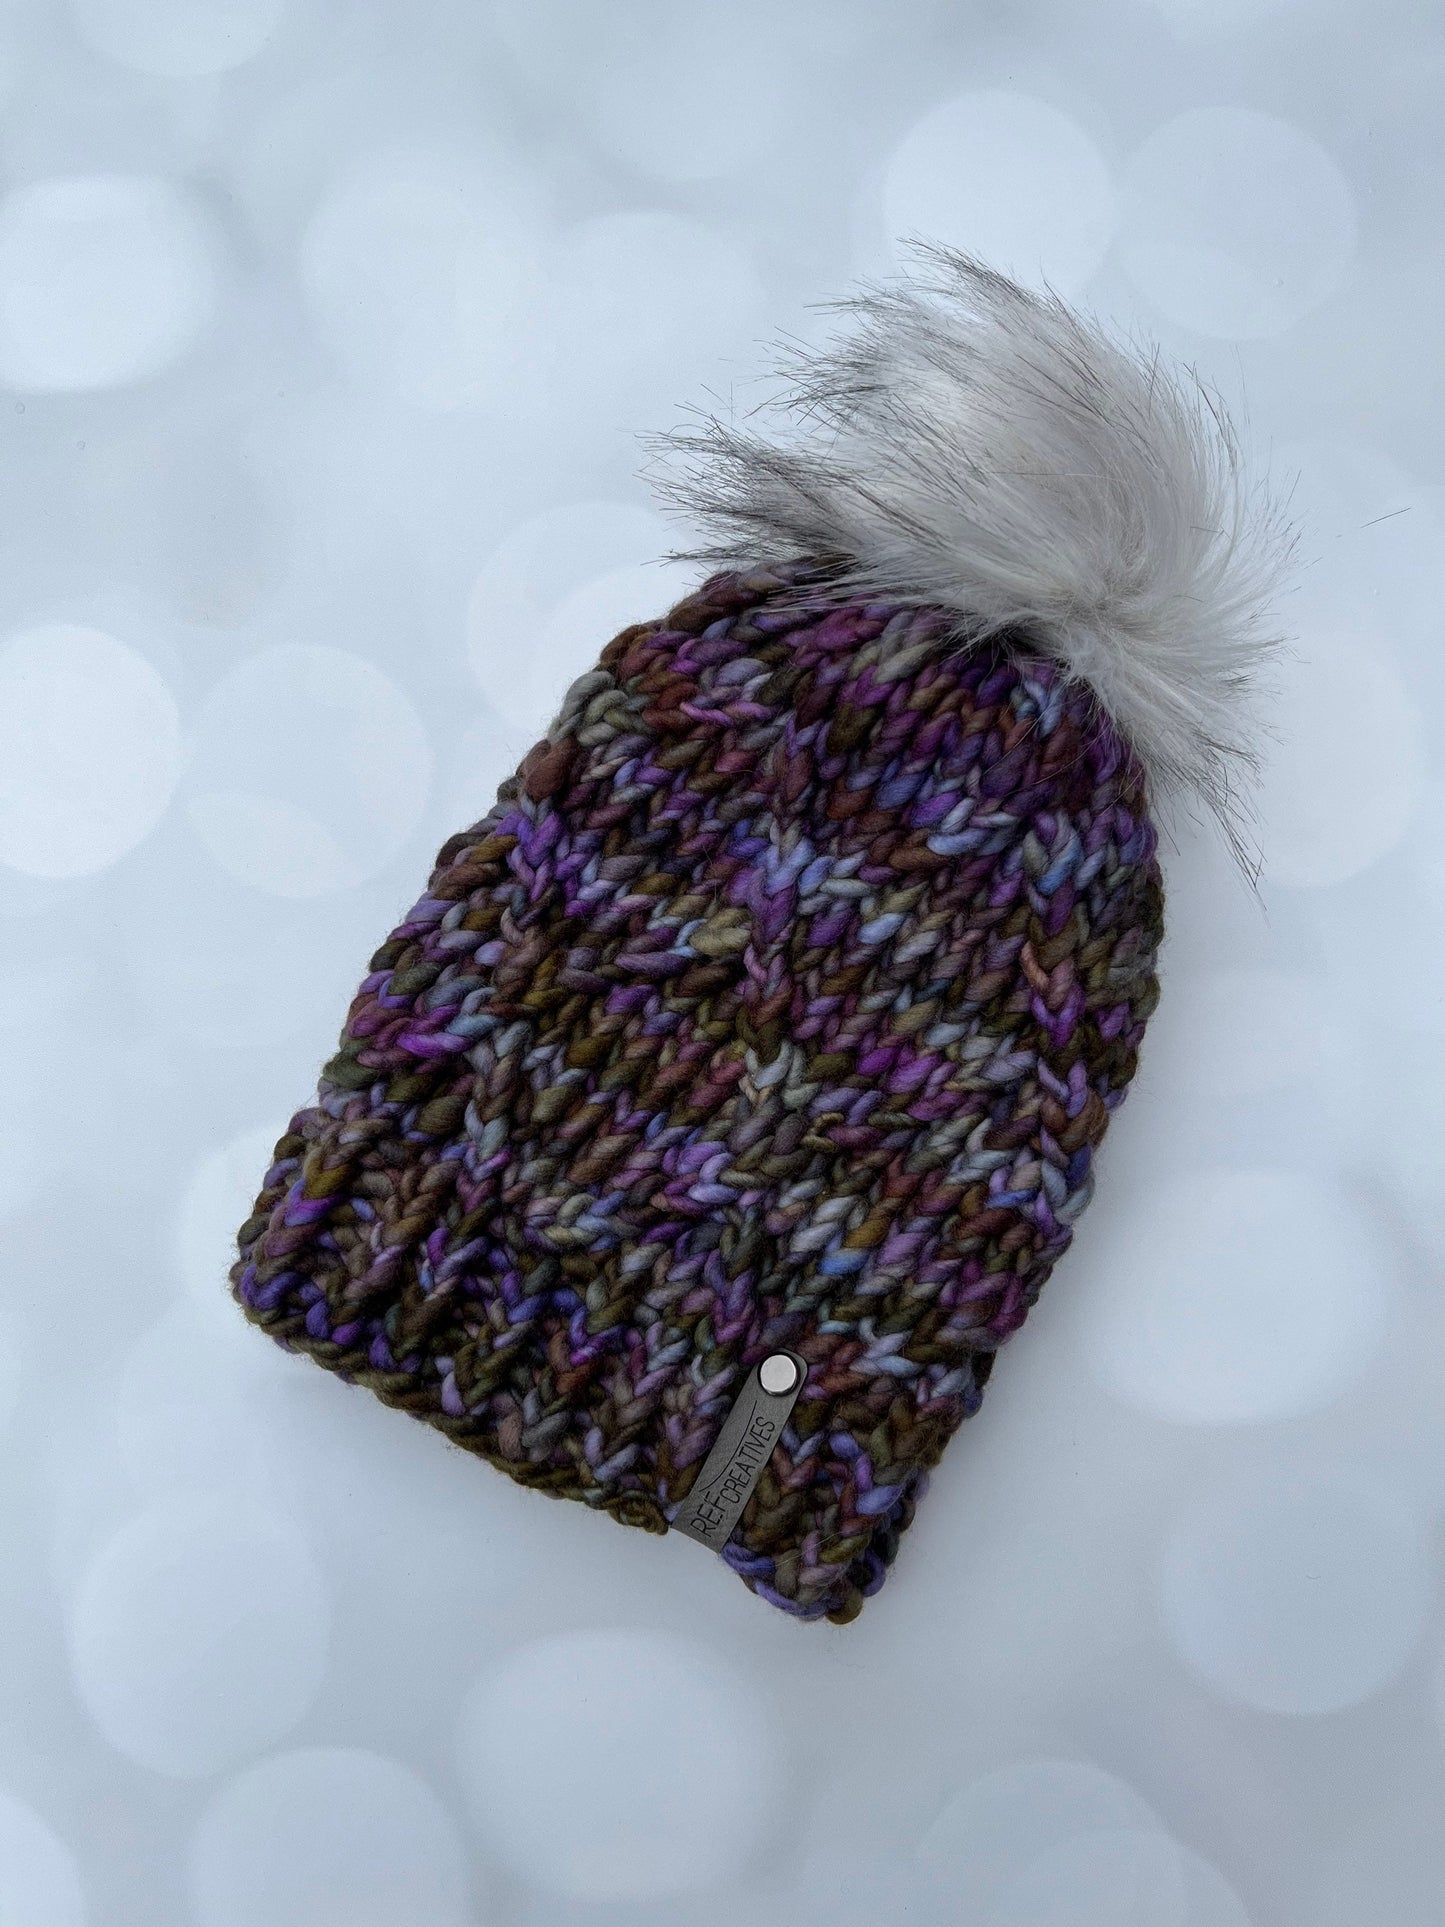 Luxury Moody Merino Wool Knit Hat - Blackberry Bush Lattice Hand Knit Hat with Hand Dyed Yarn